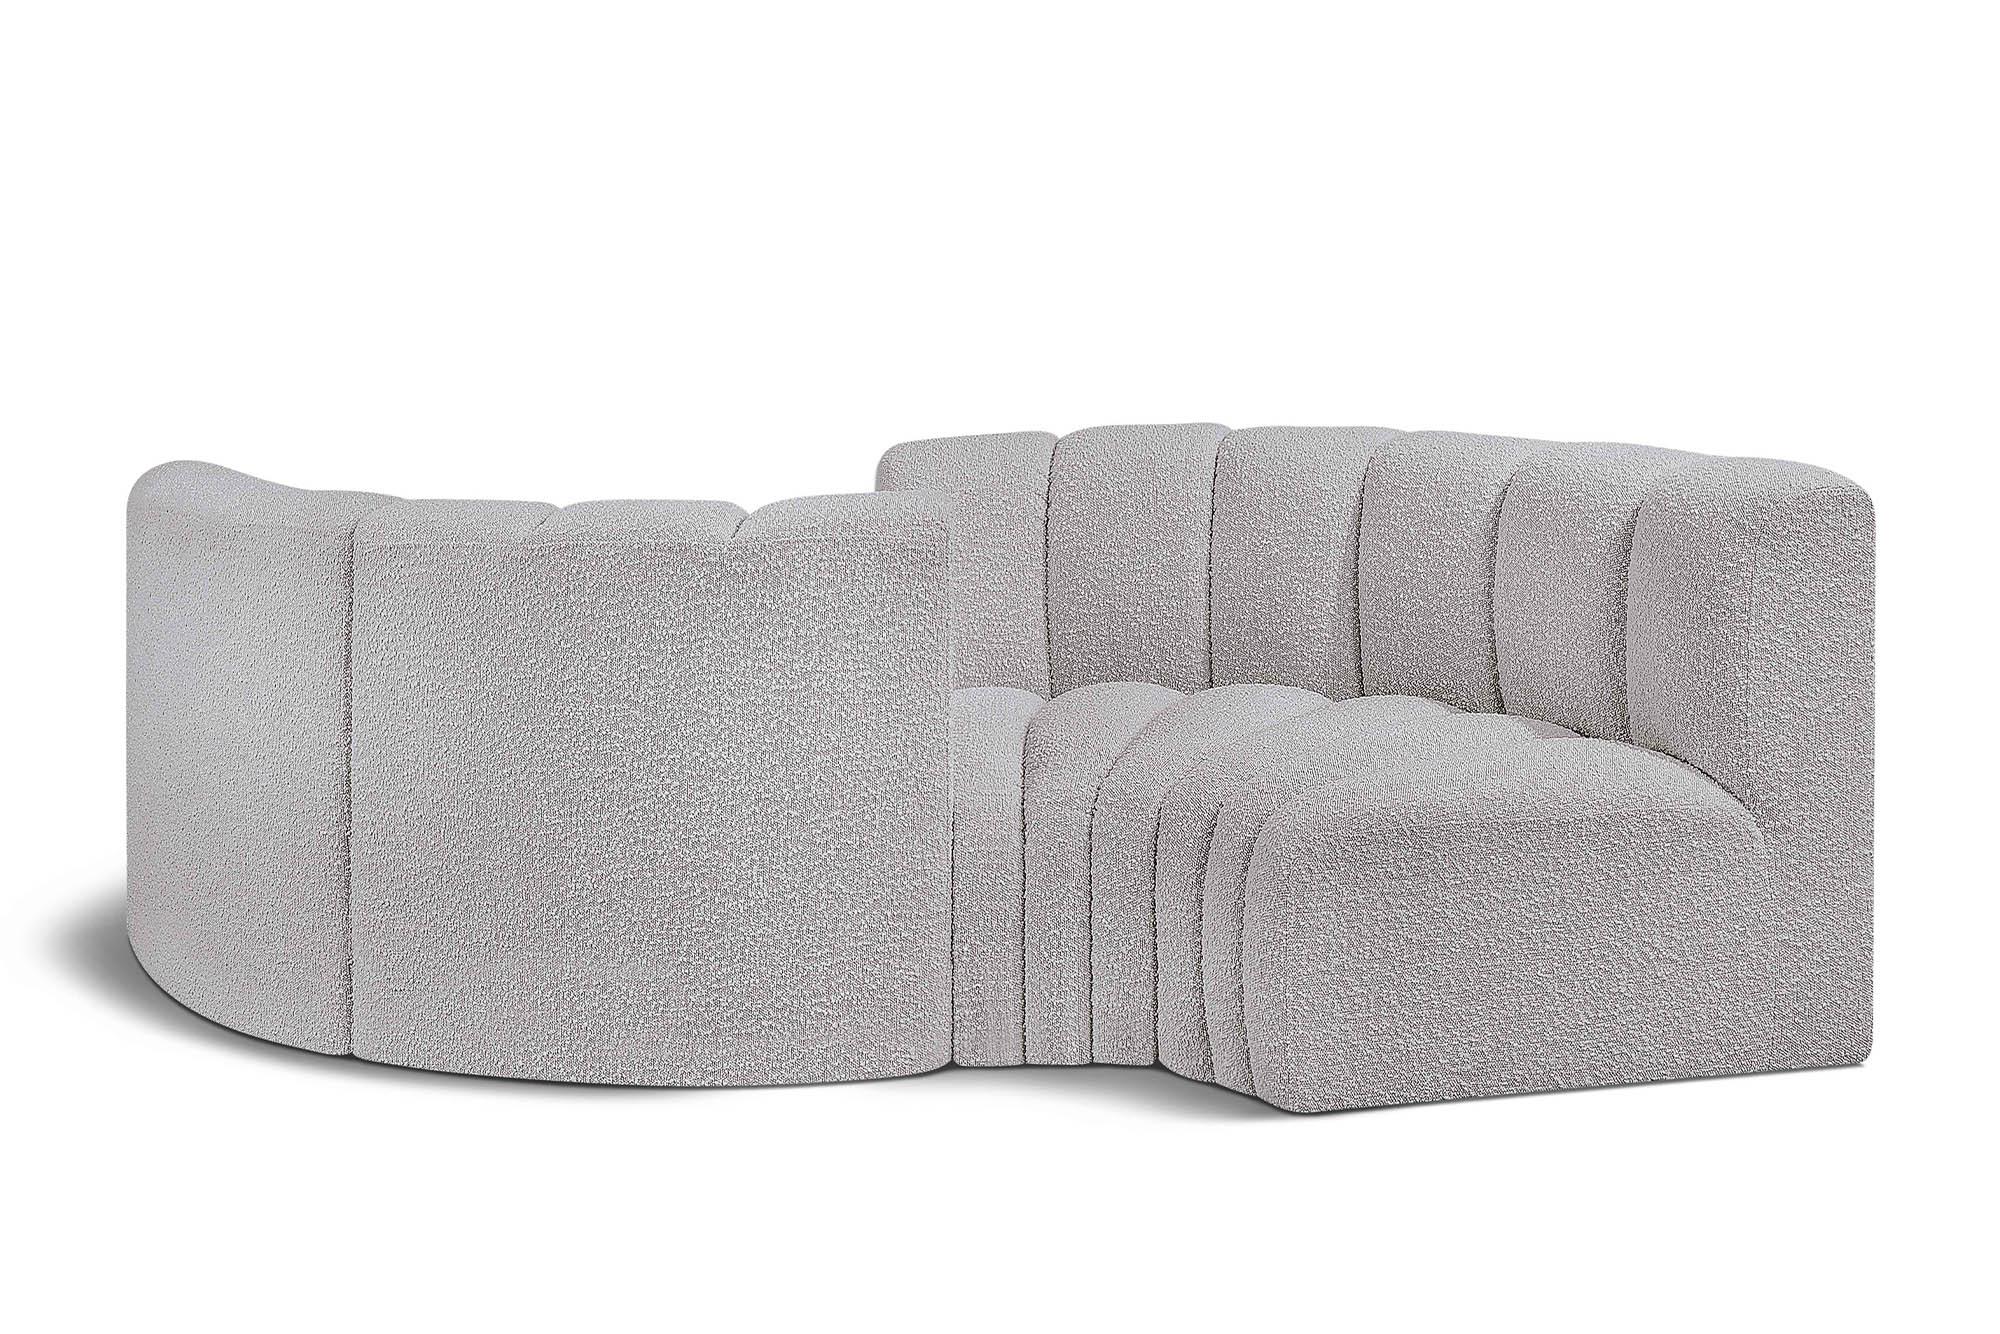 Contemporary, Modern Modular Sectional Sofa ARC 102Grey-S4F 102Grey-S4F in Gray 